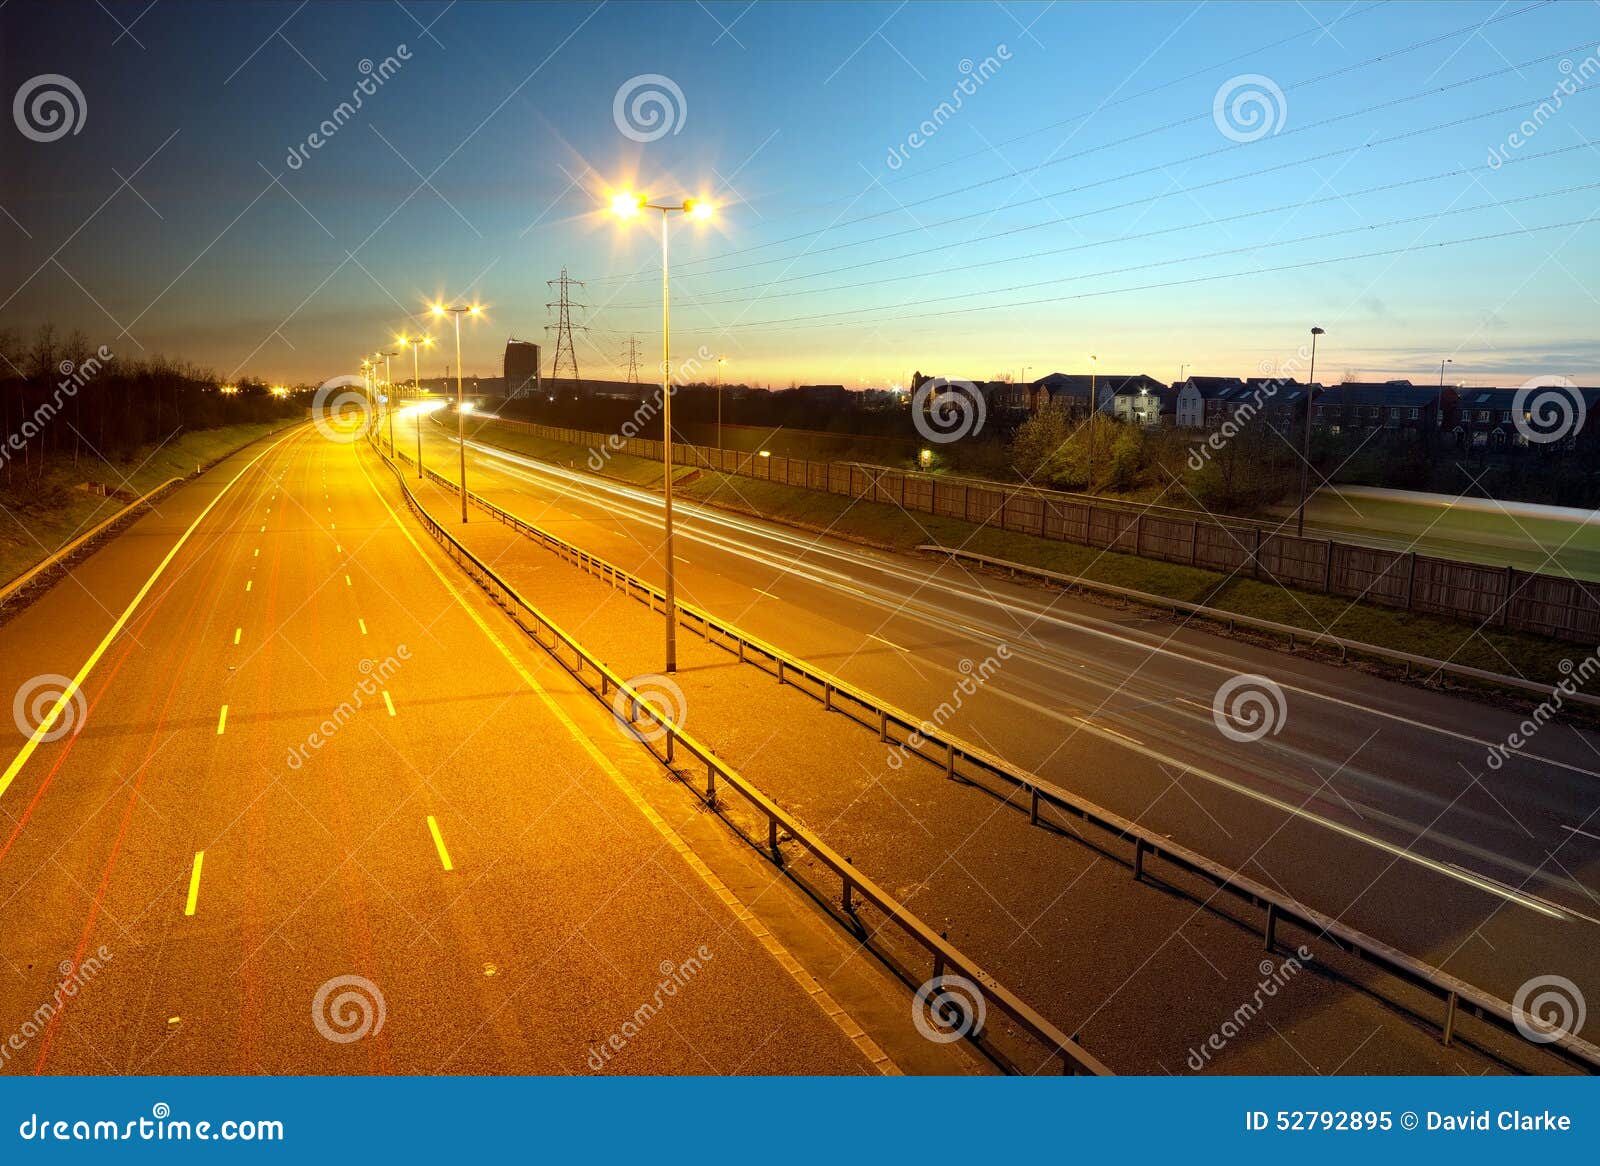 m6 toll road at dusk, cannock